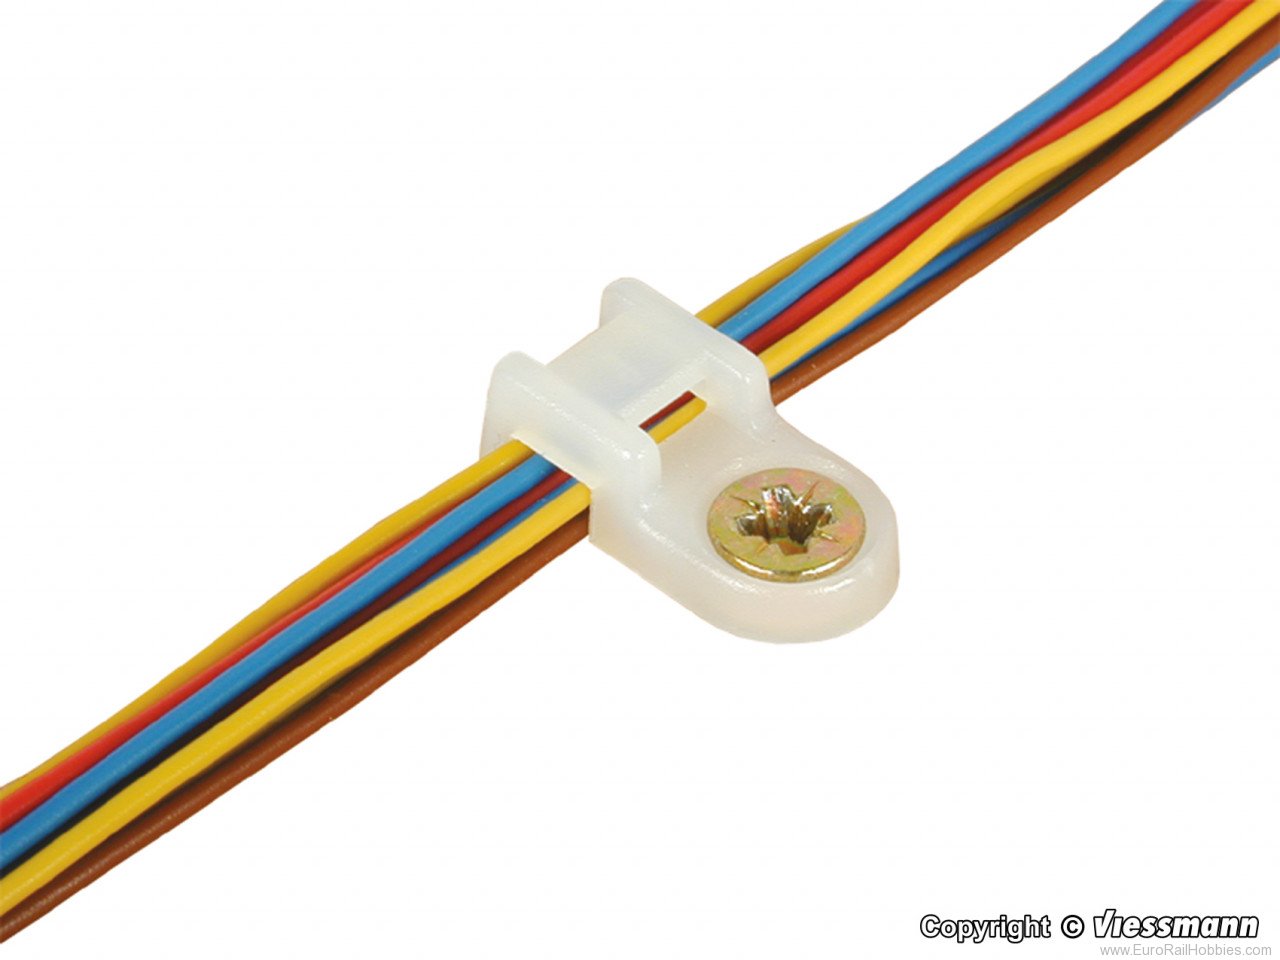 Viessmann 6846 Cable retaining clamp, with screws, 100 piece